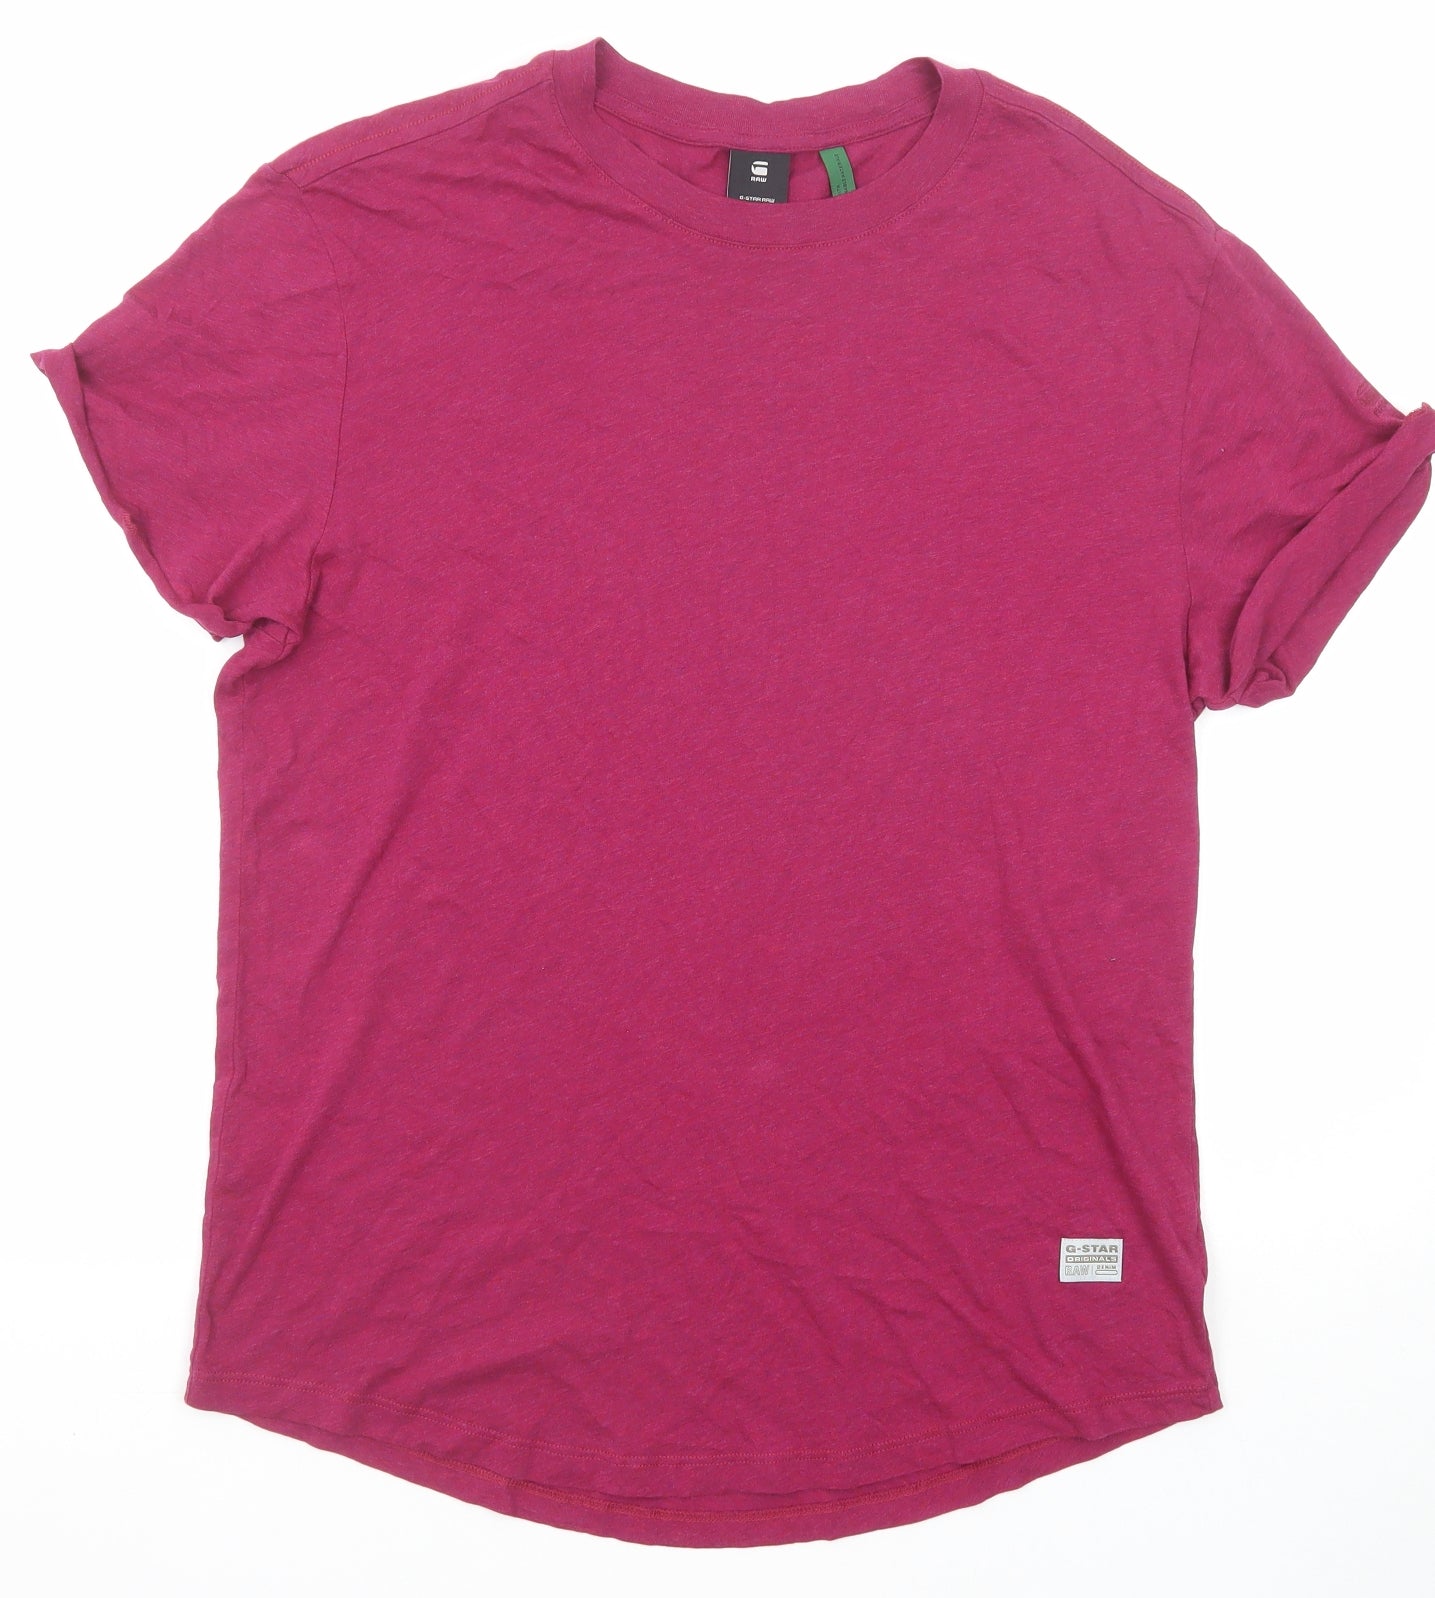 G-Star Womens Pink Cotton Basic T-Shirt Size S Crew Neck